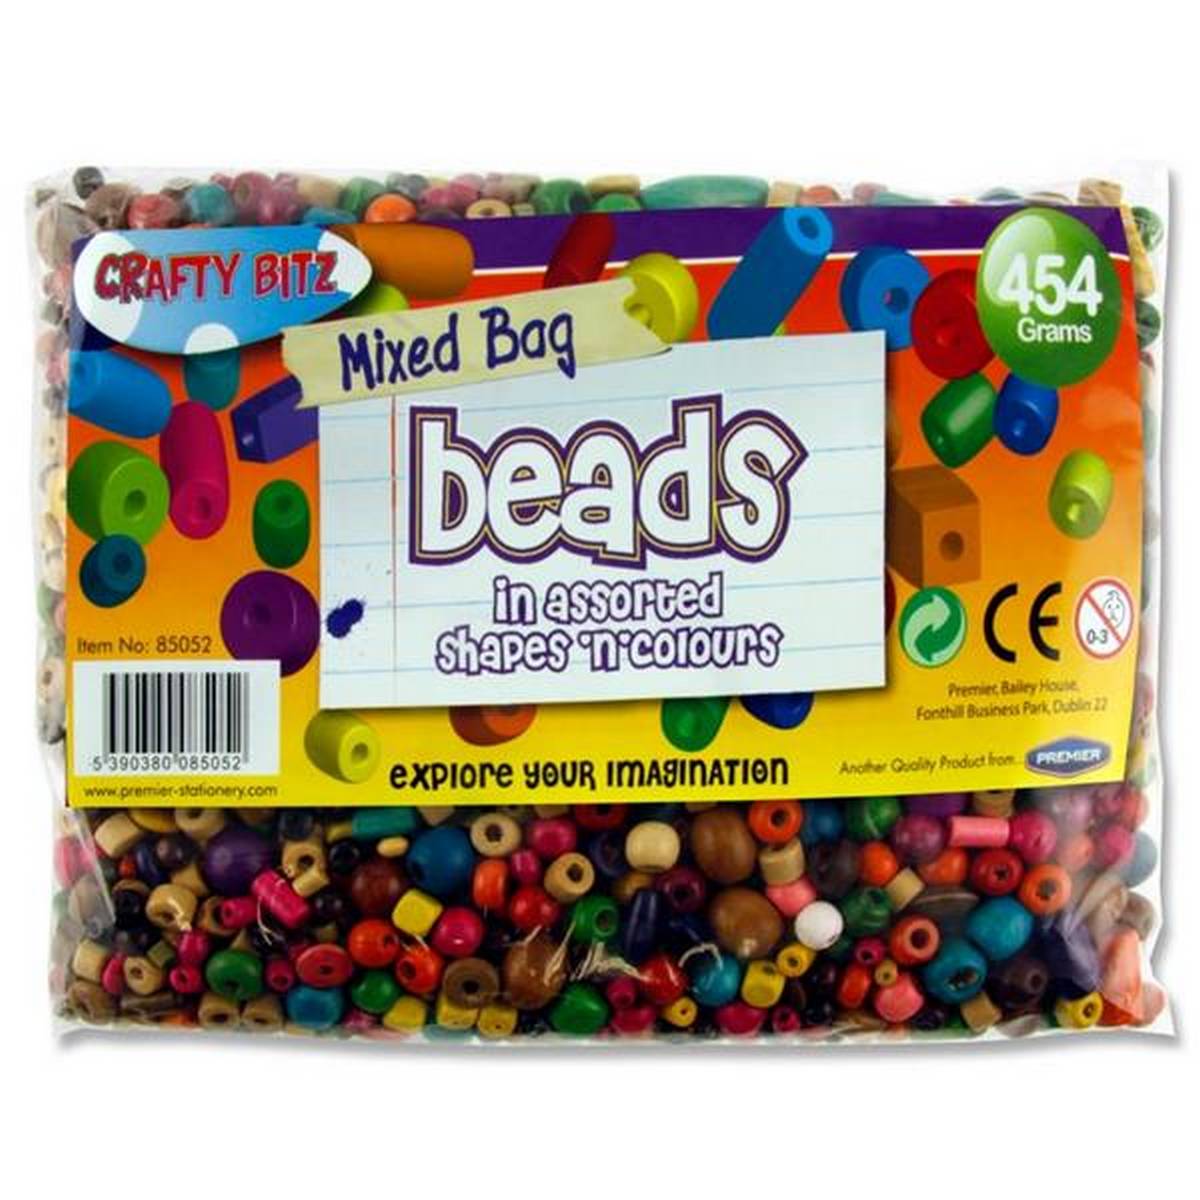 Assorted Wooden Beads Bag 454g